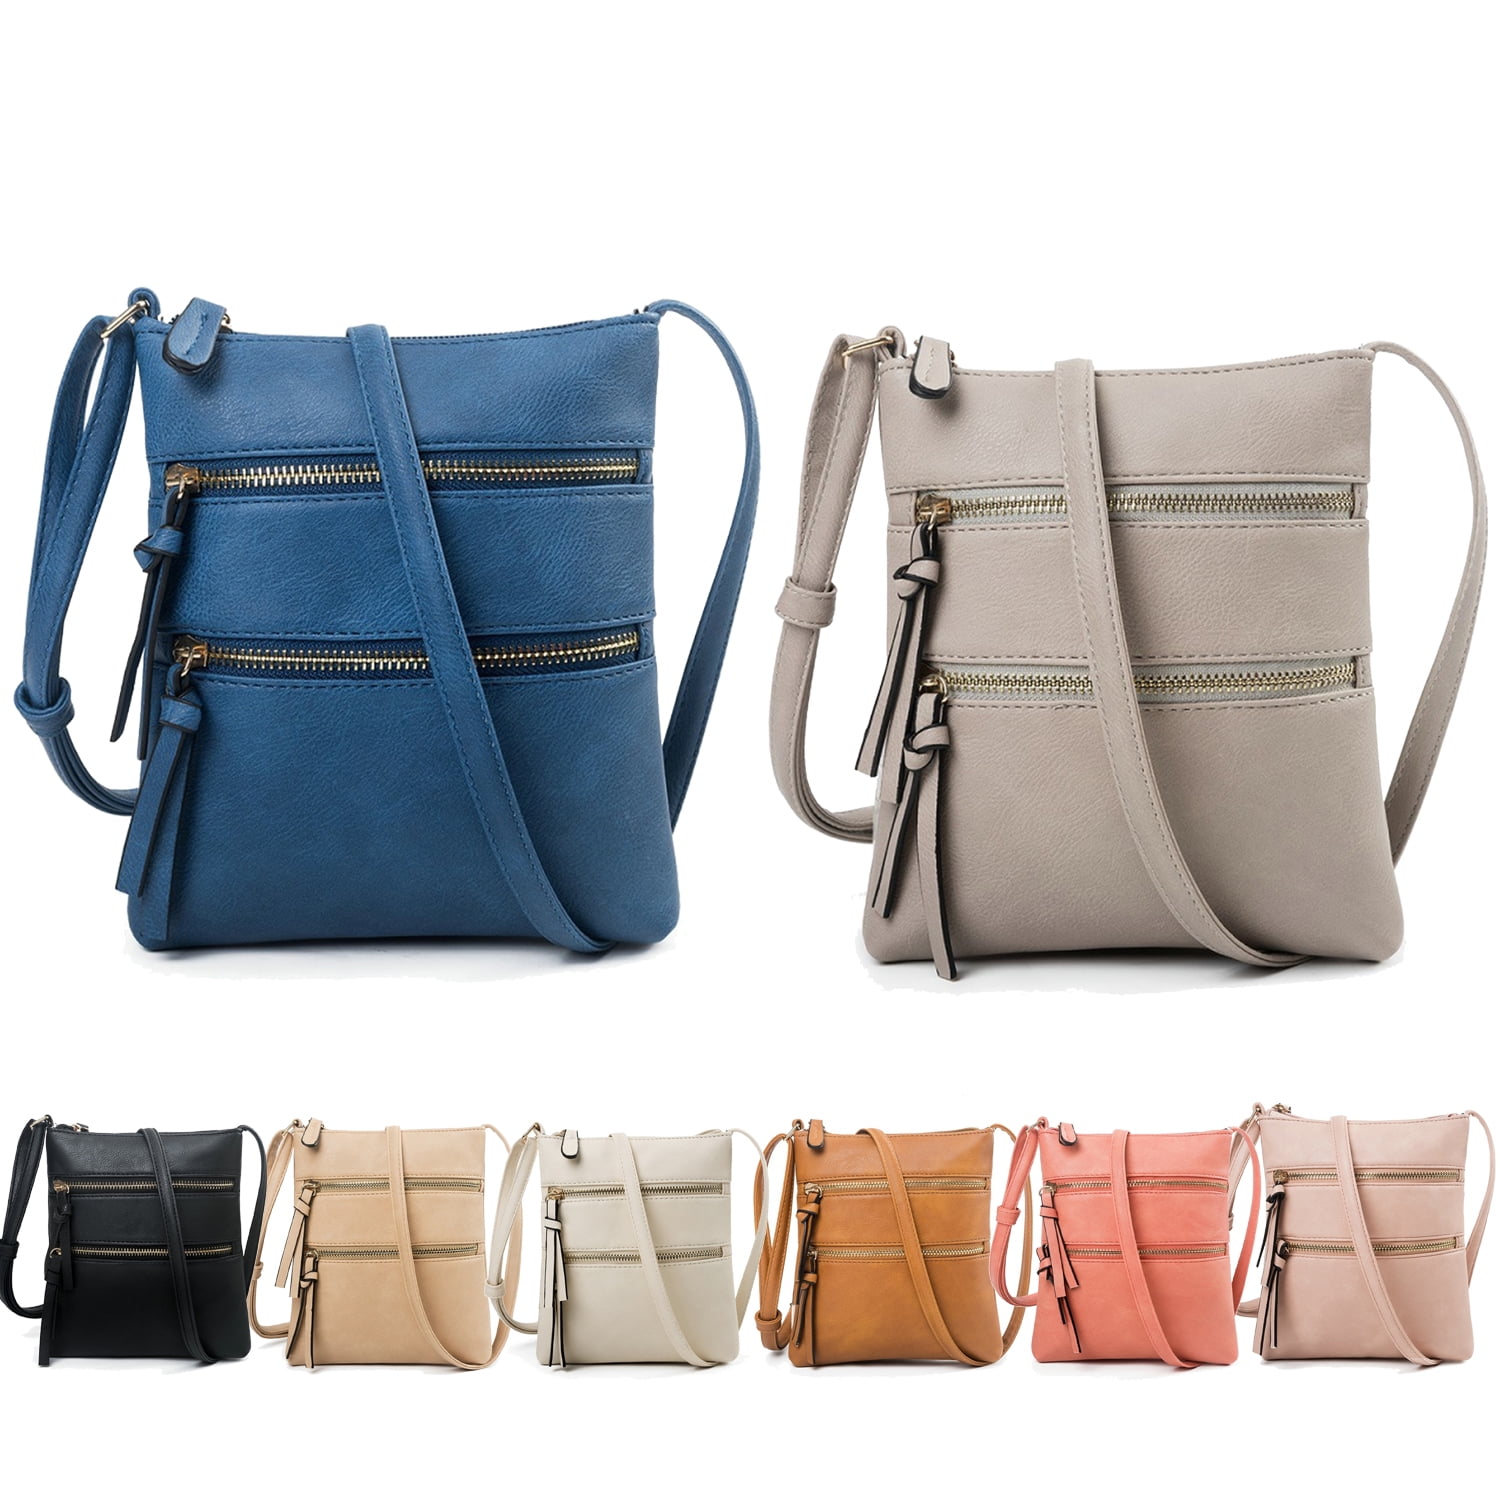 Buy CROJUYI Small Crossbody Bags Shoulder Bag for Women Ladies Cell Phone  Wallet Purse and Handbag, 1-1-khaki, Small at Amazon.in